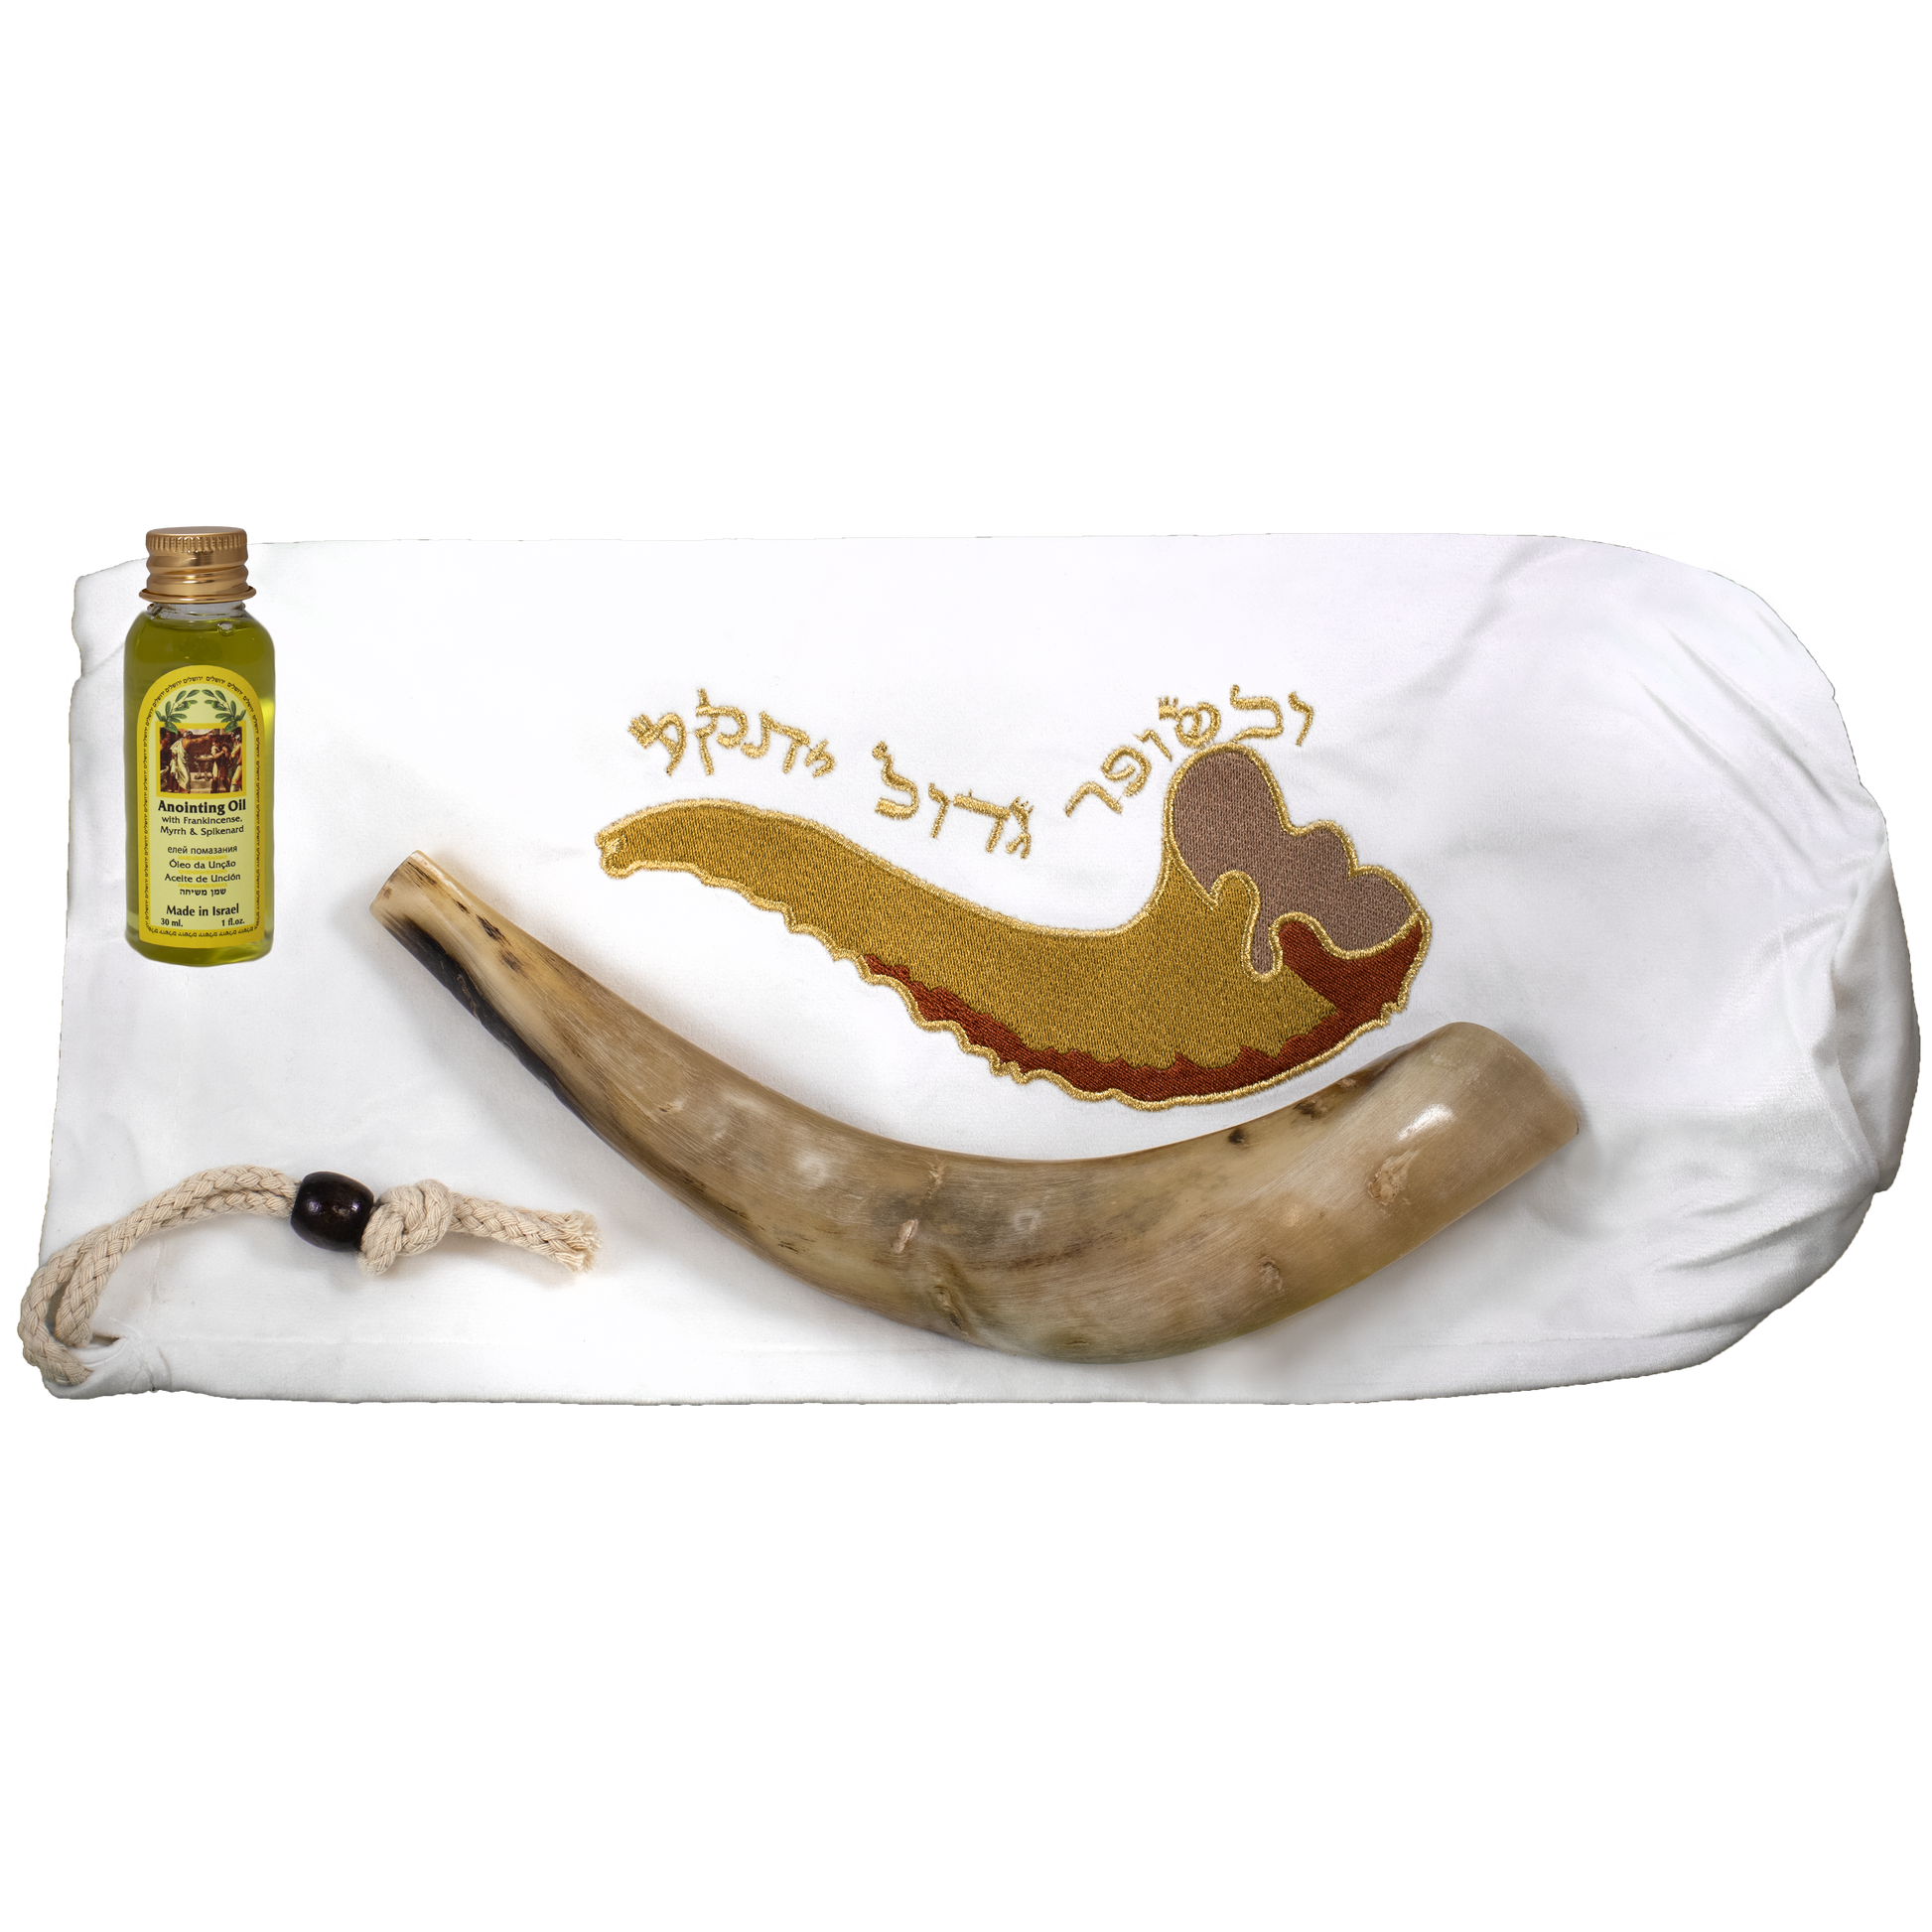 Anointing Ram's Horn Shofar + Galilee Anointing Oil Frankincense and Myrrh